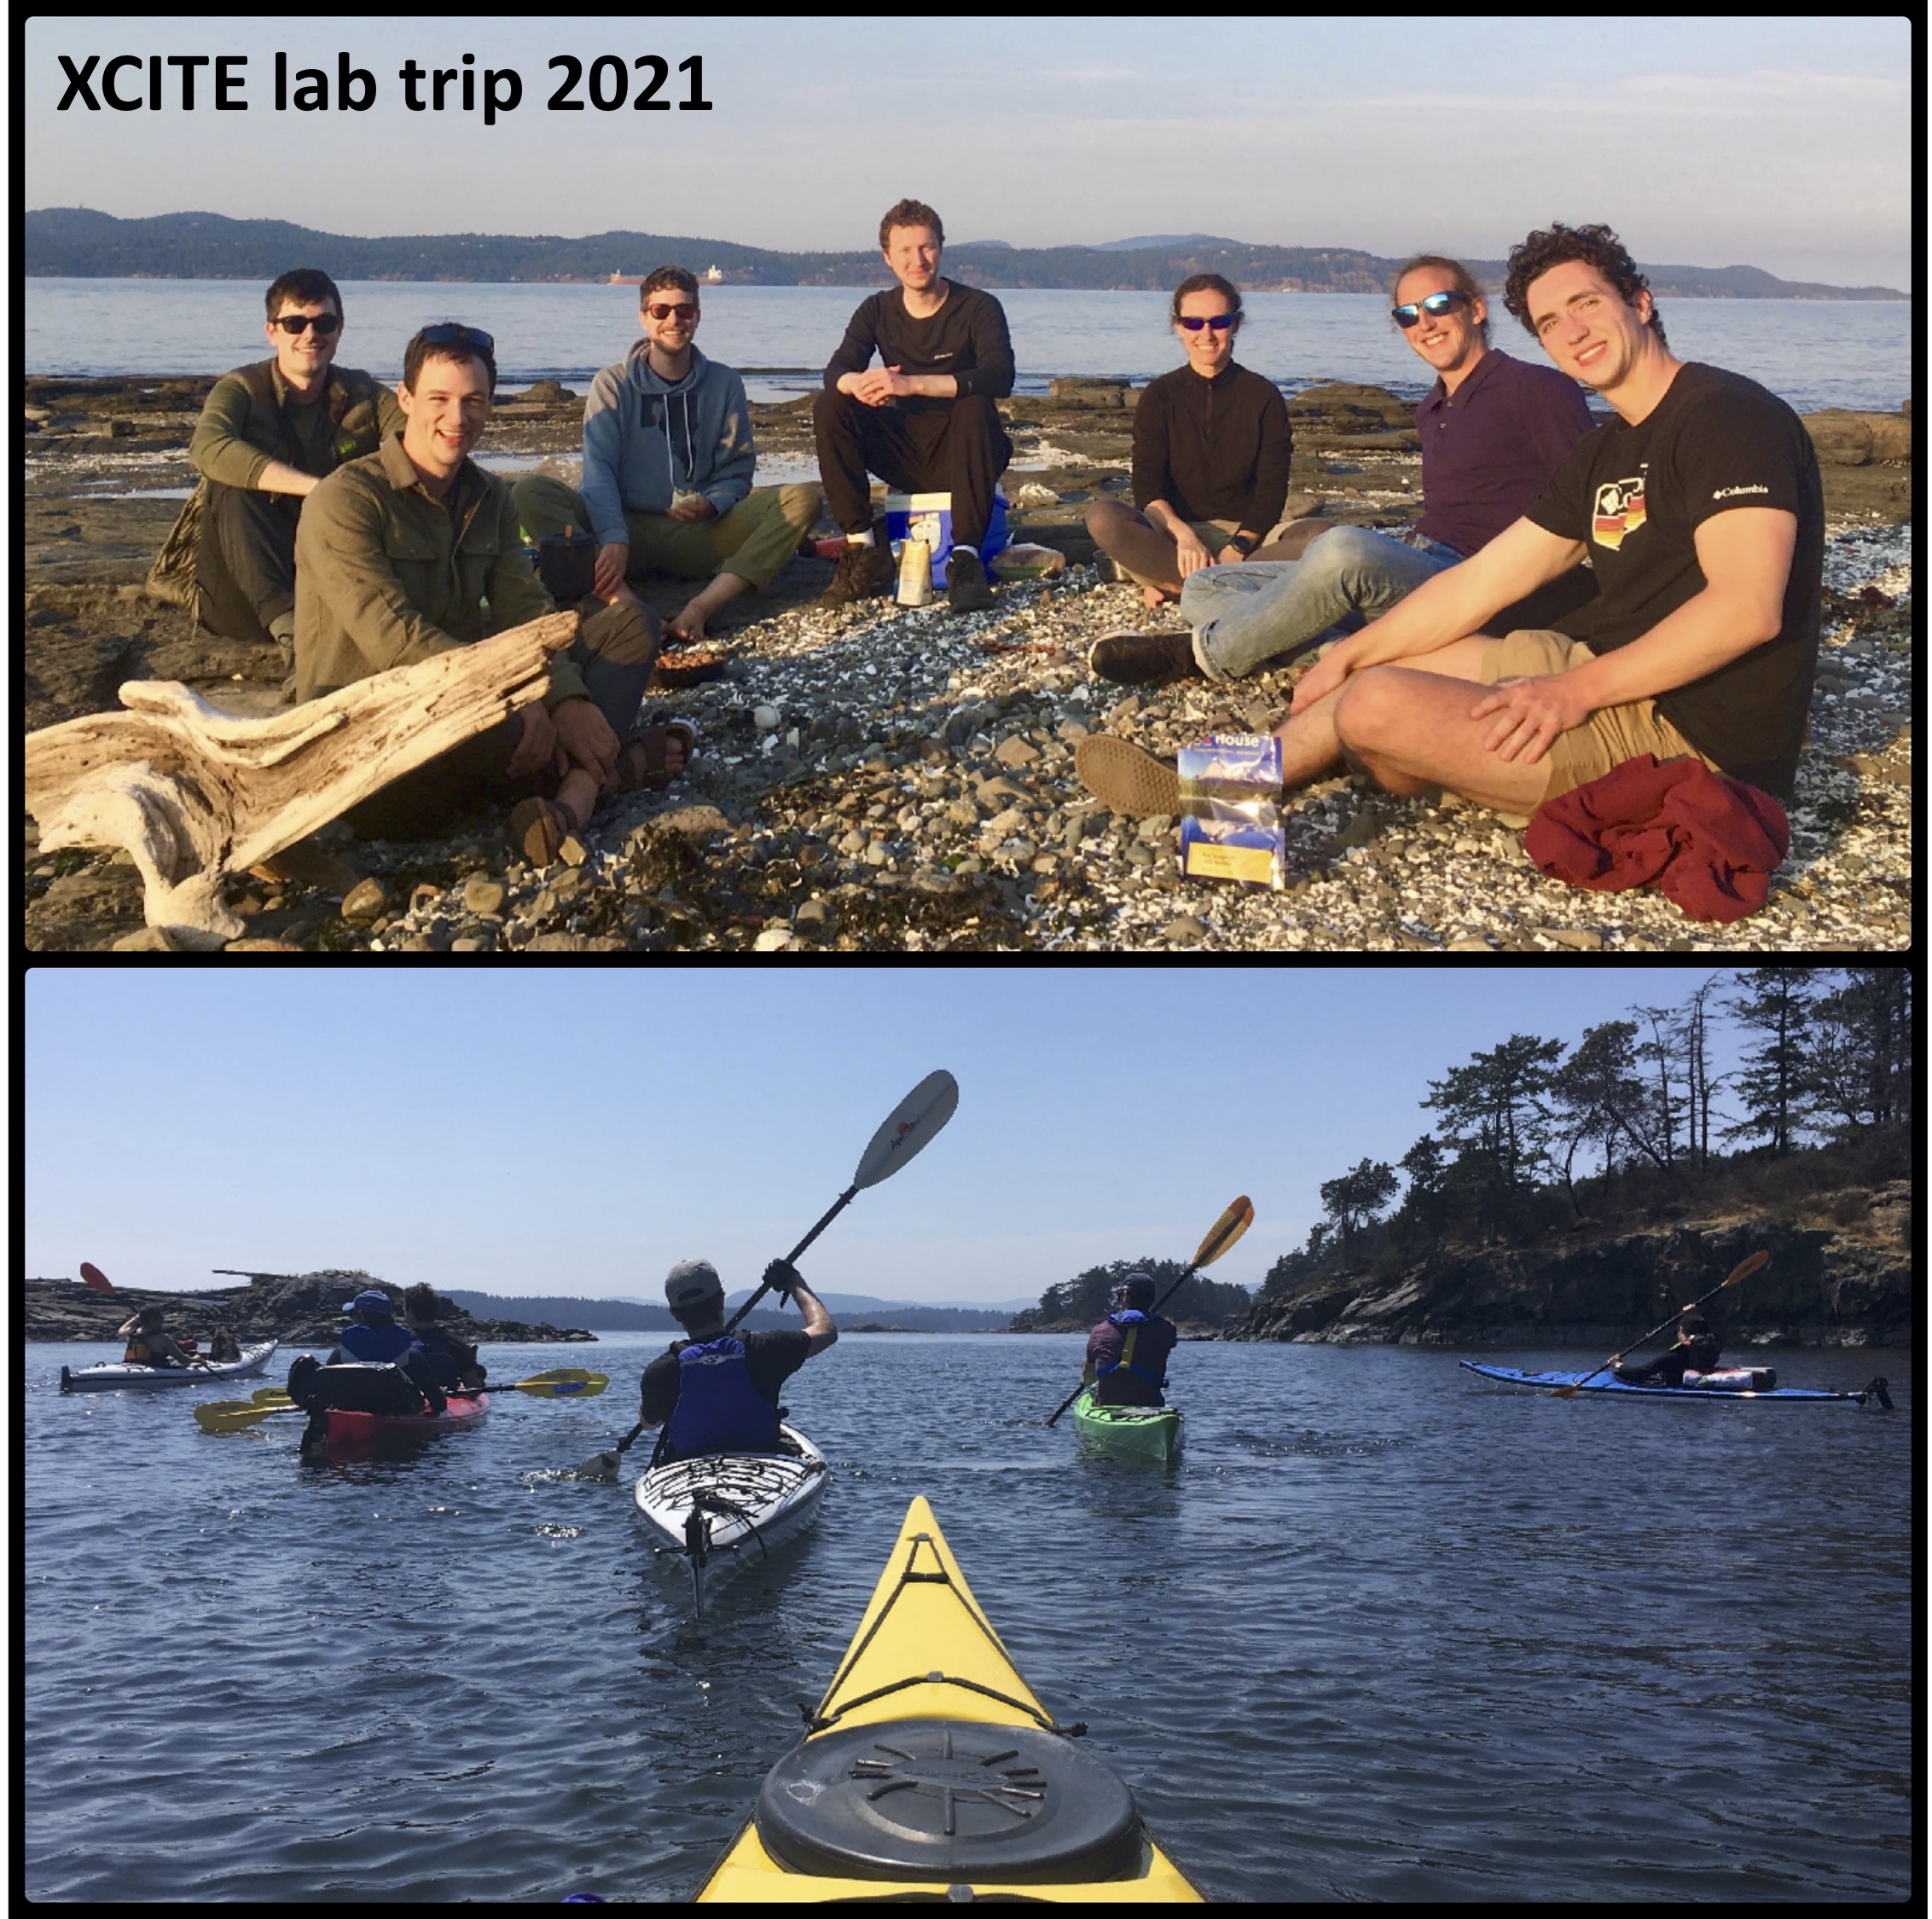 2021 XCITE lab trip